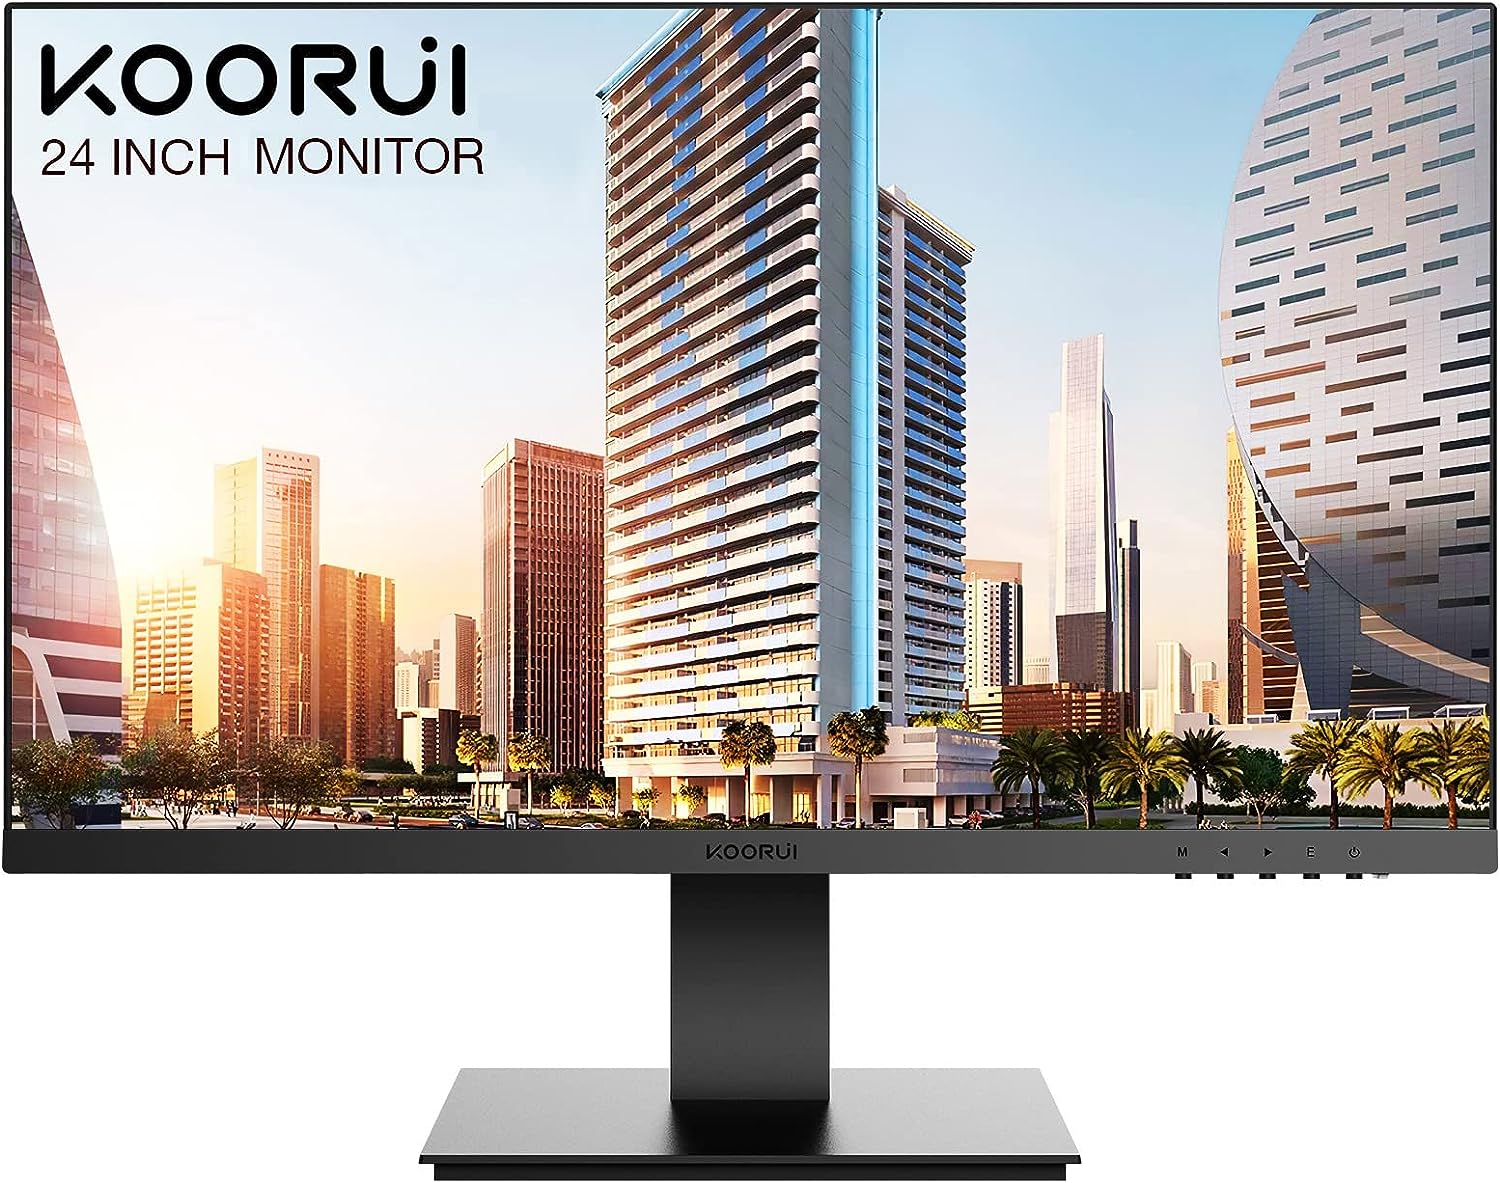 KOORUI 24 Full HD IPS Monitor Review